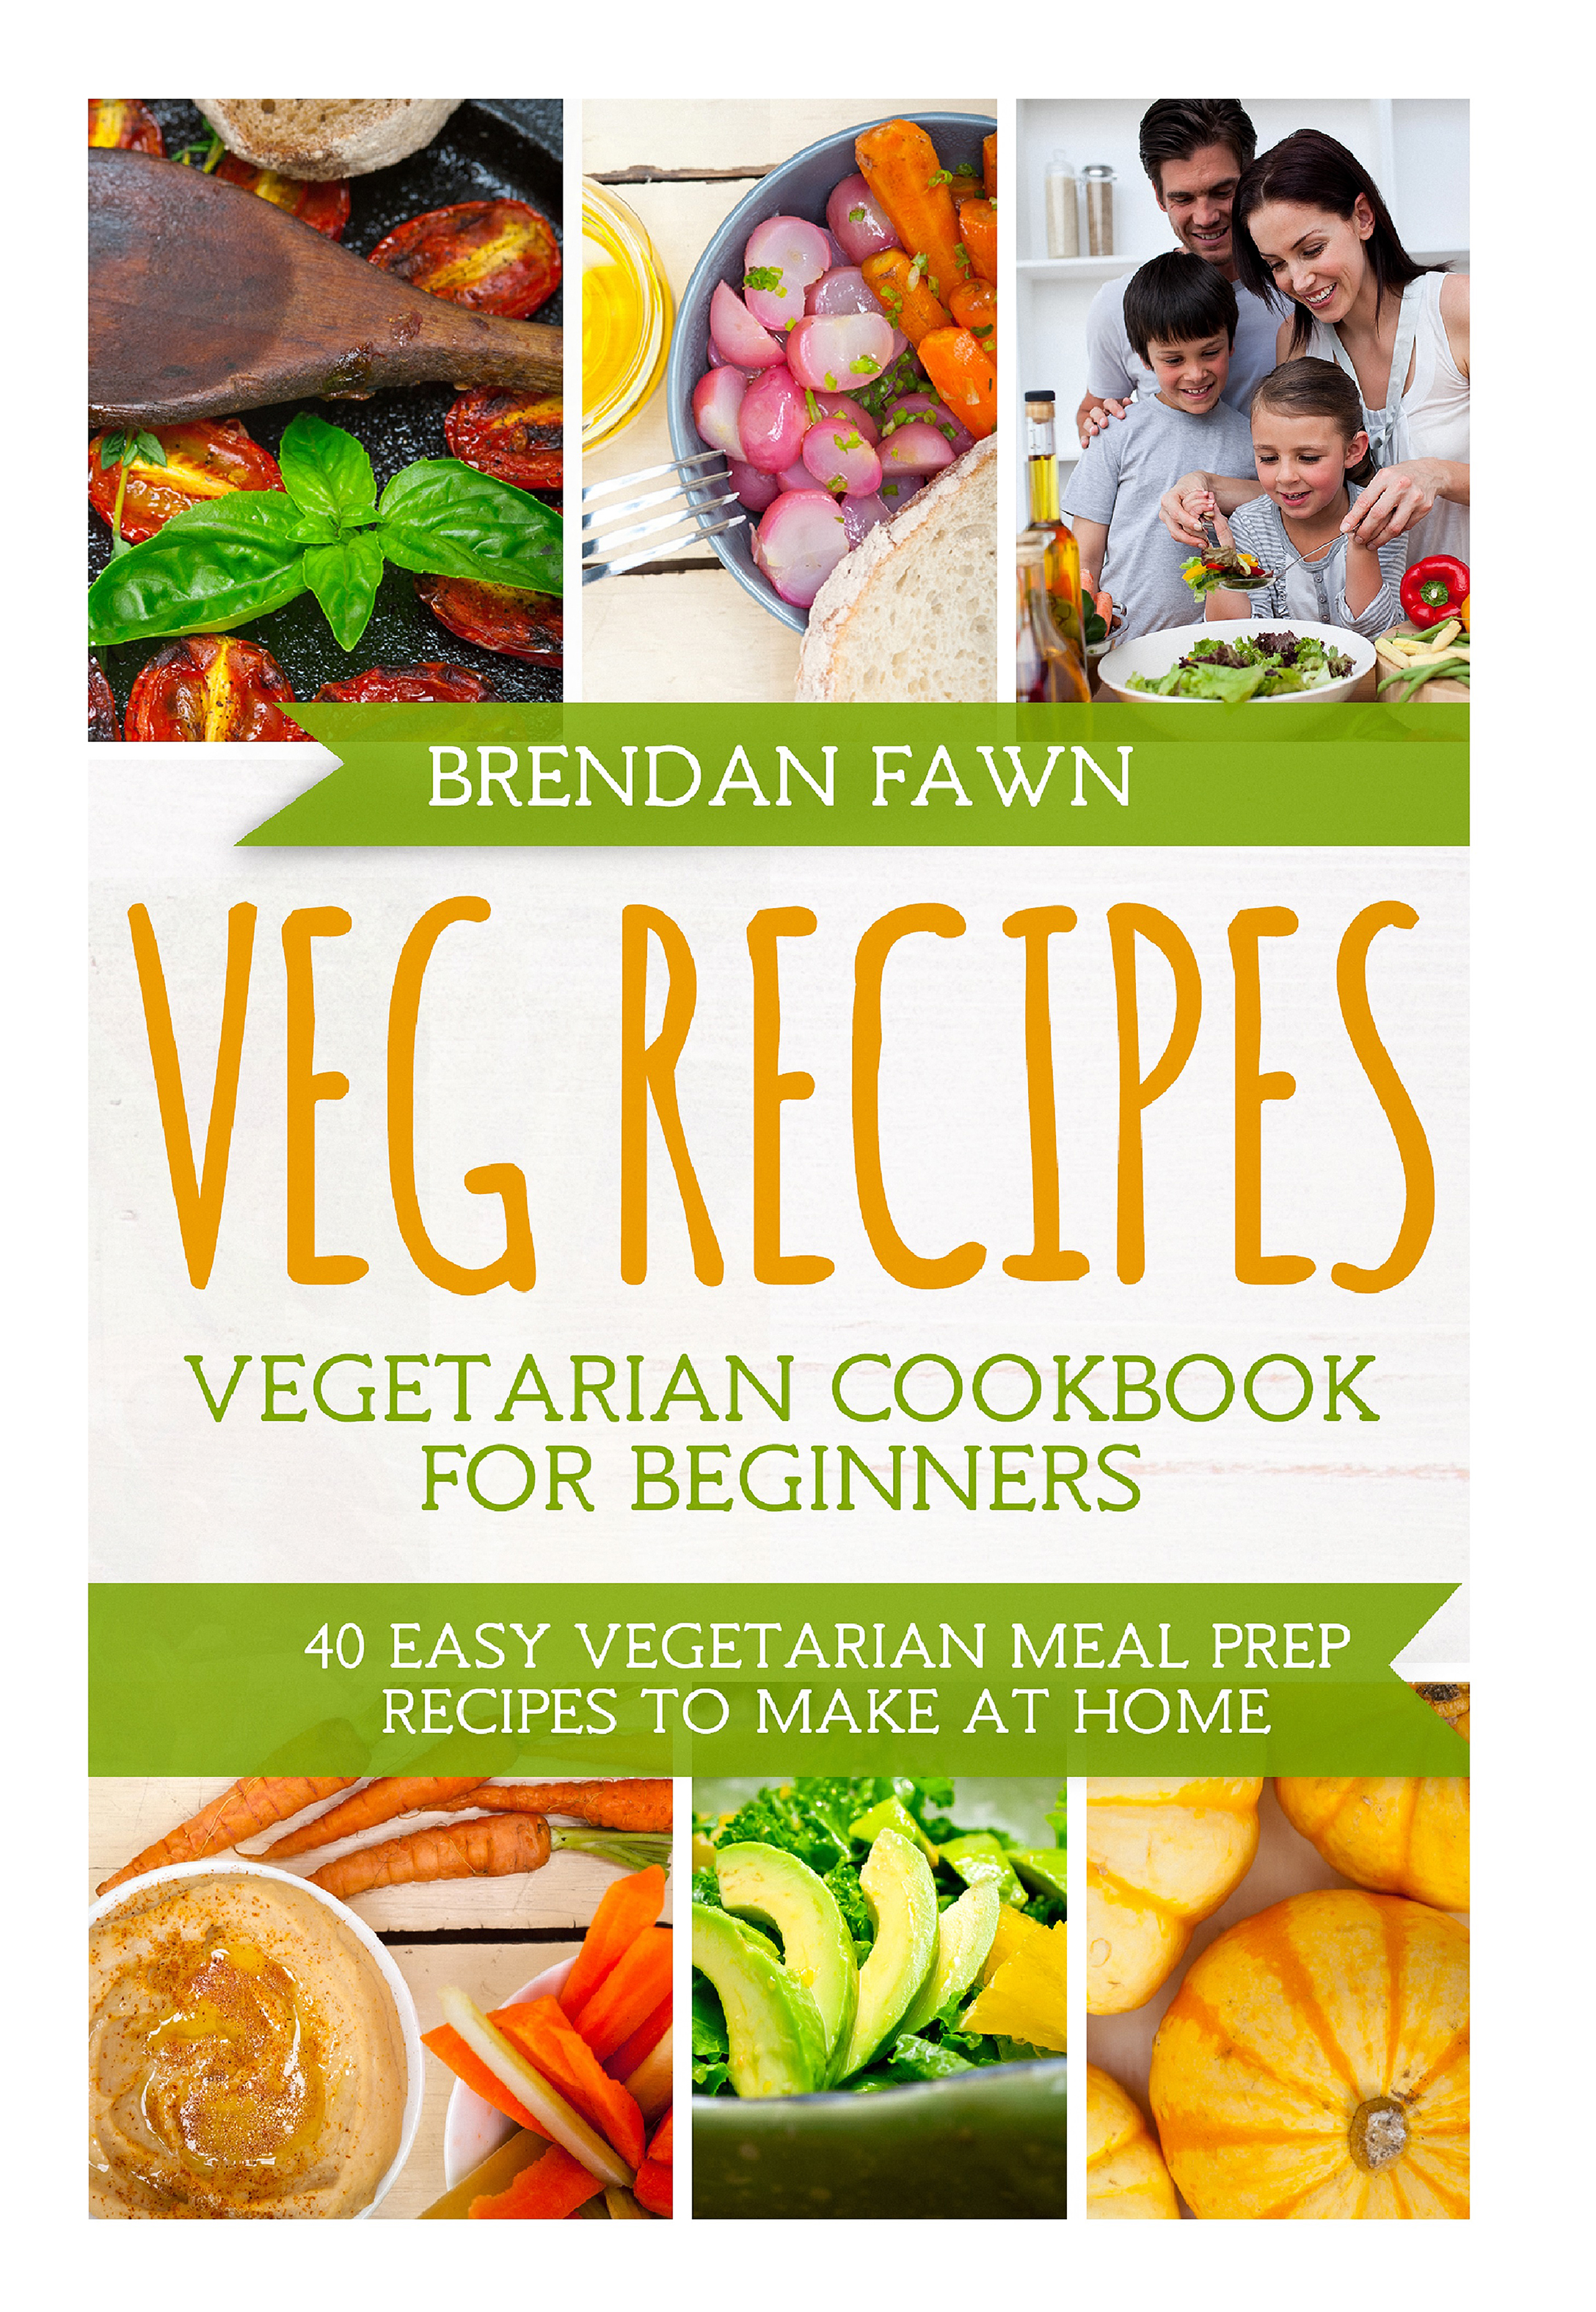 FREE: Veg Recipes: Vegetarian Cookbook for Beginners by Brendan Fawn